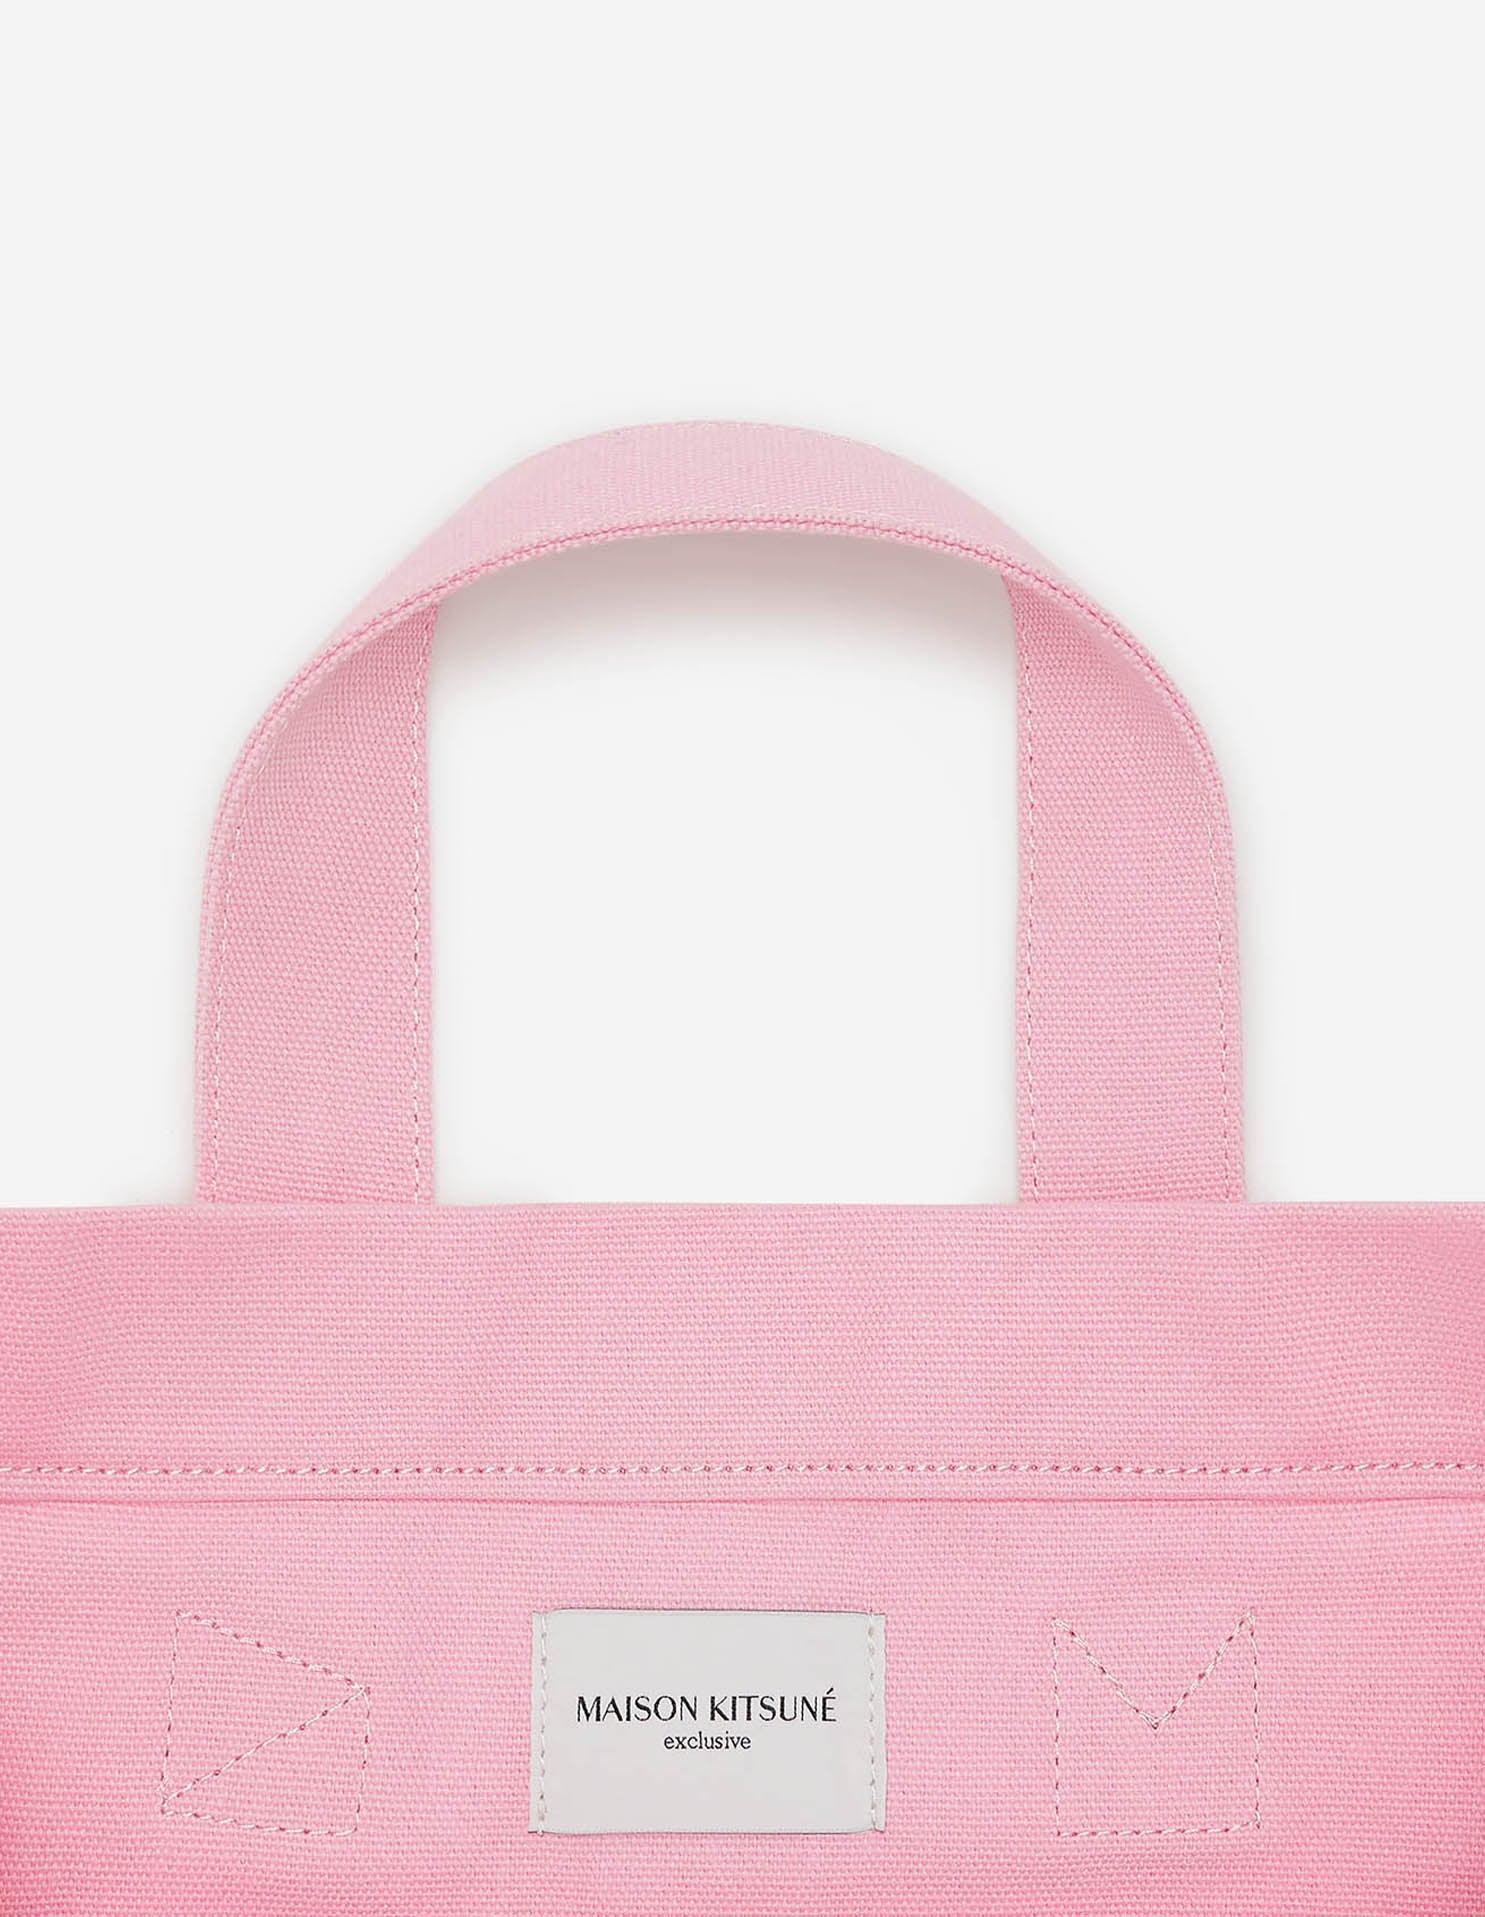 Women 4 Pink Tote bag – loveunifies